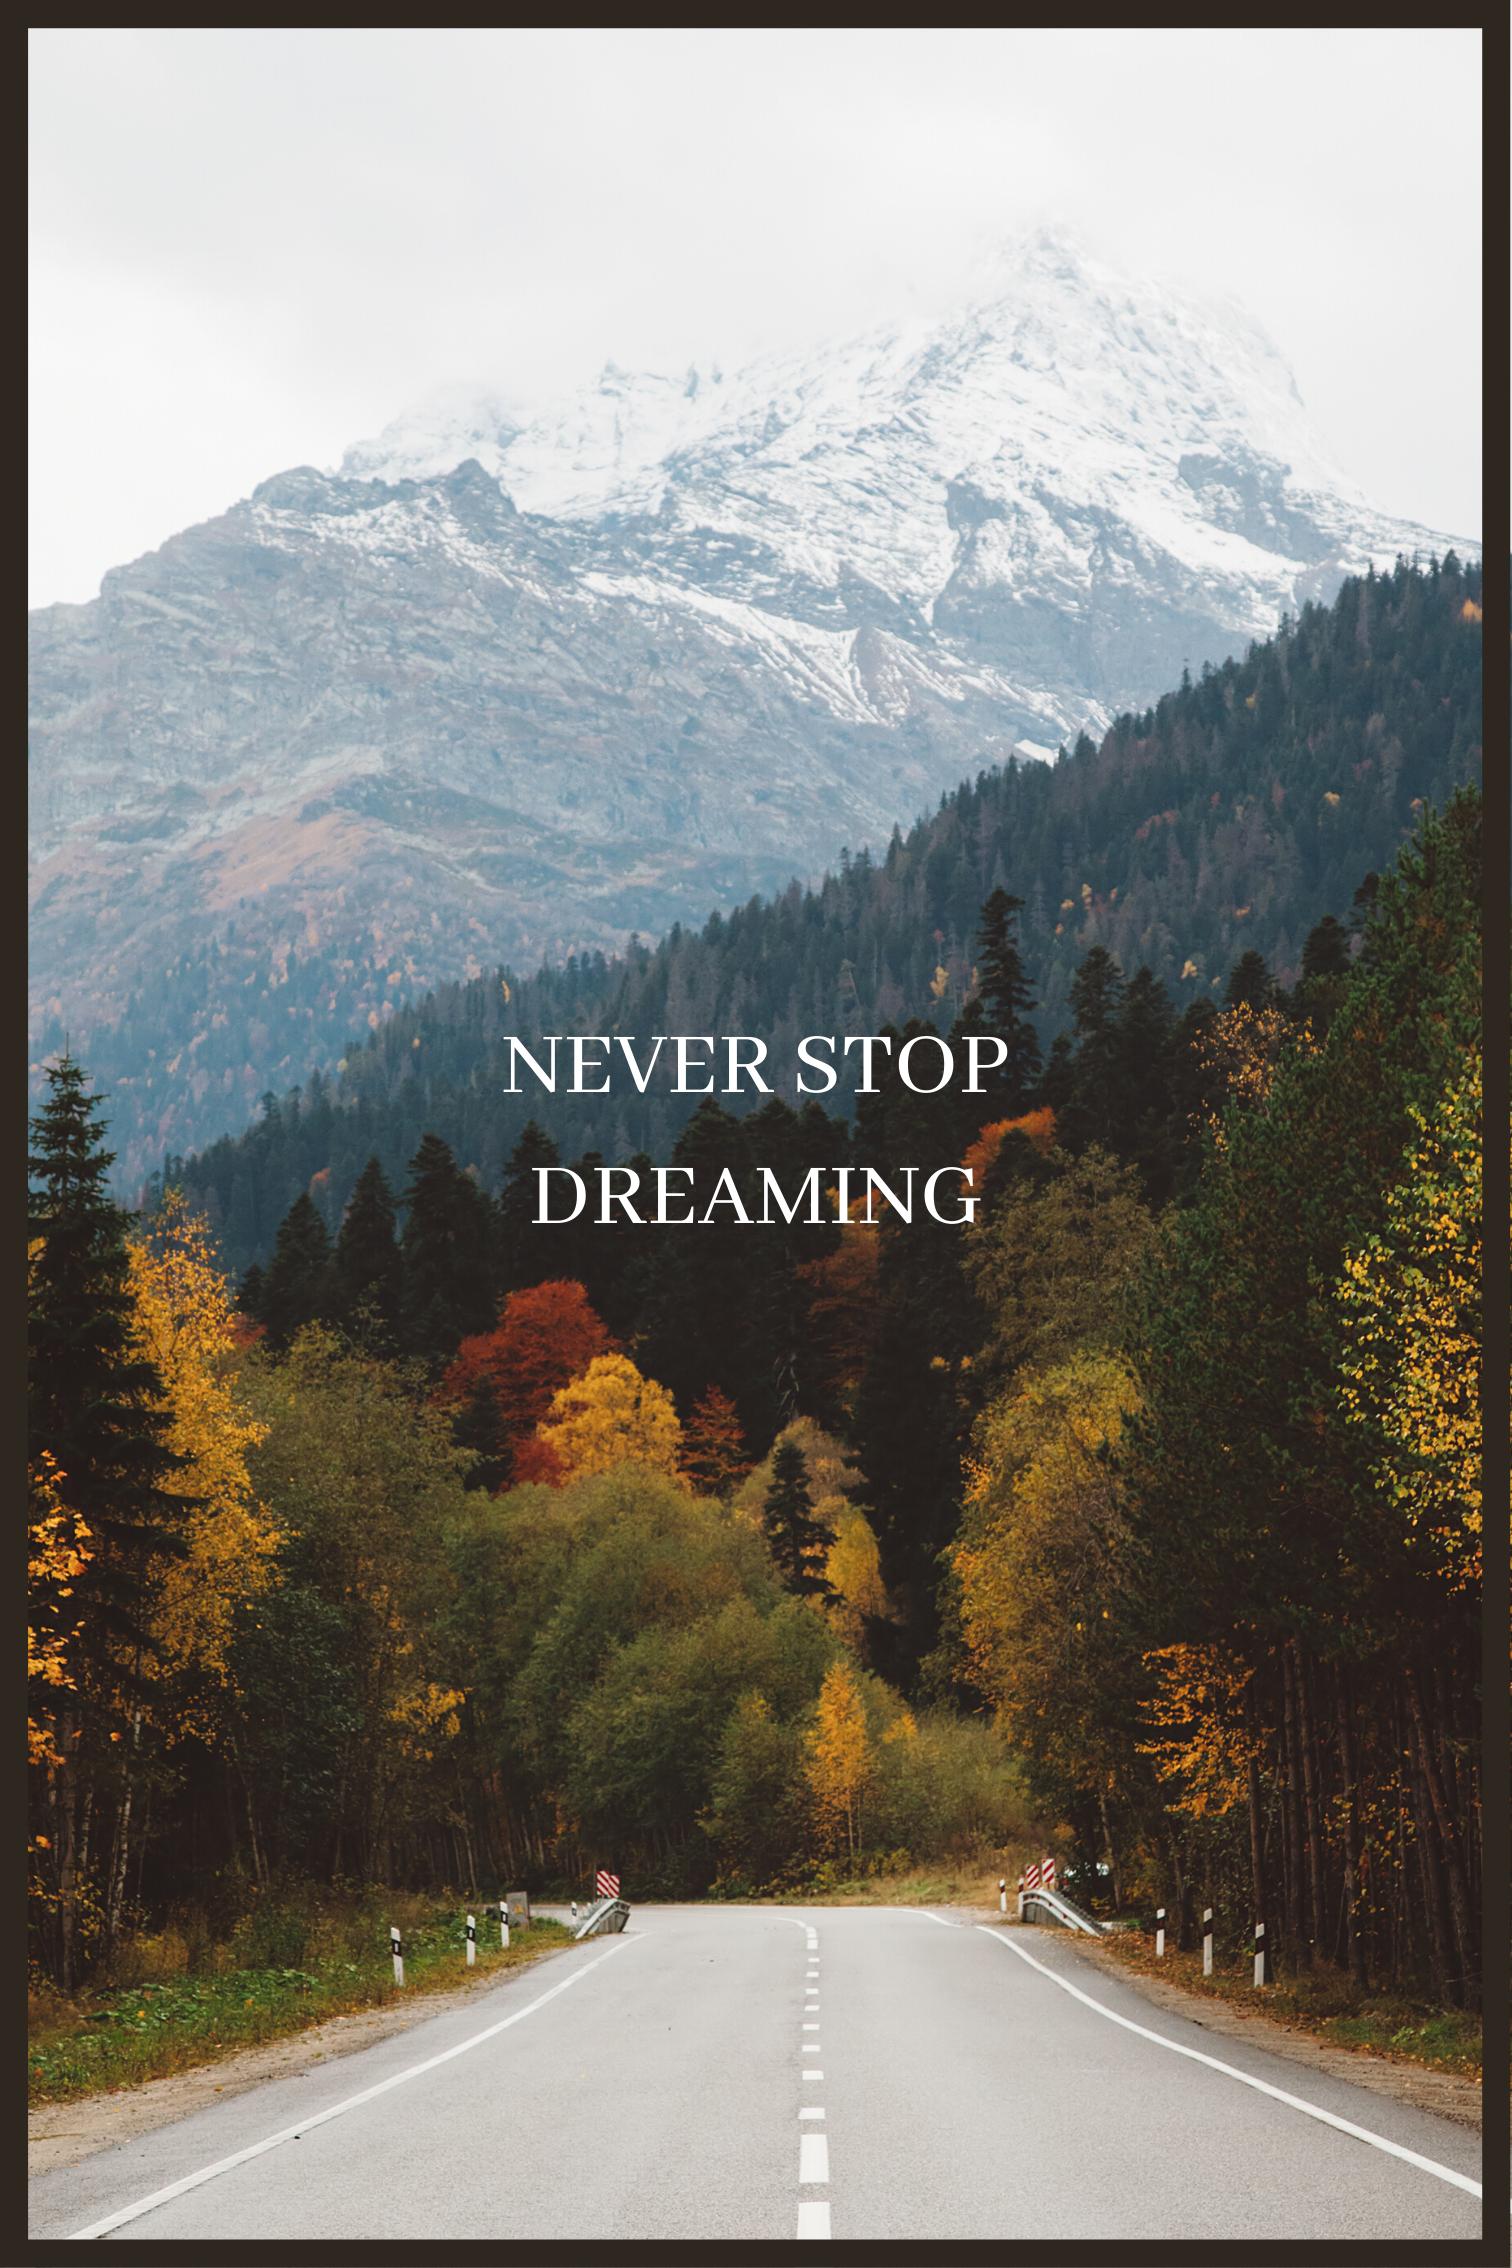 Sluta aldrig drömma affisch